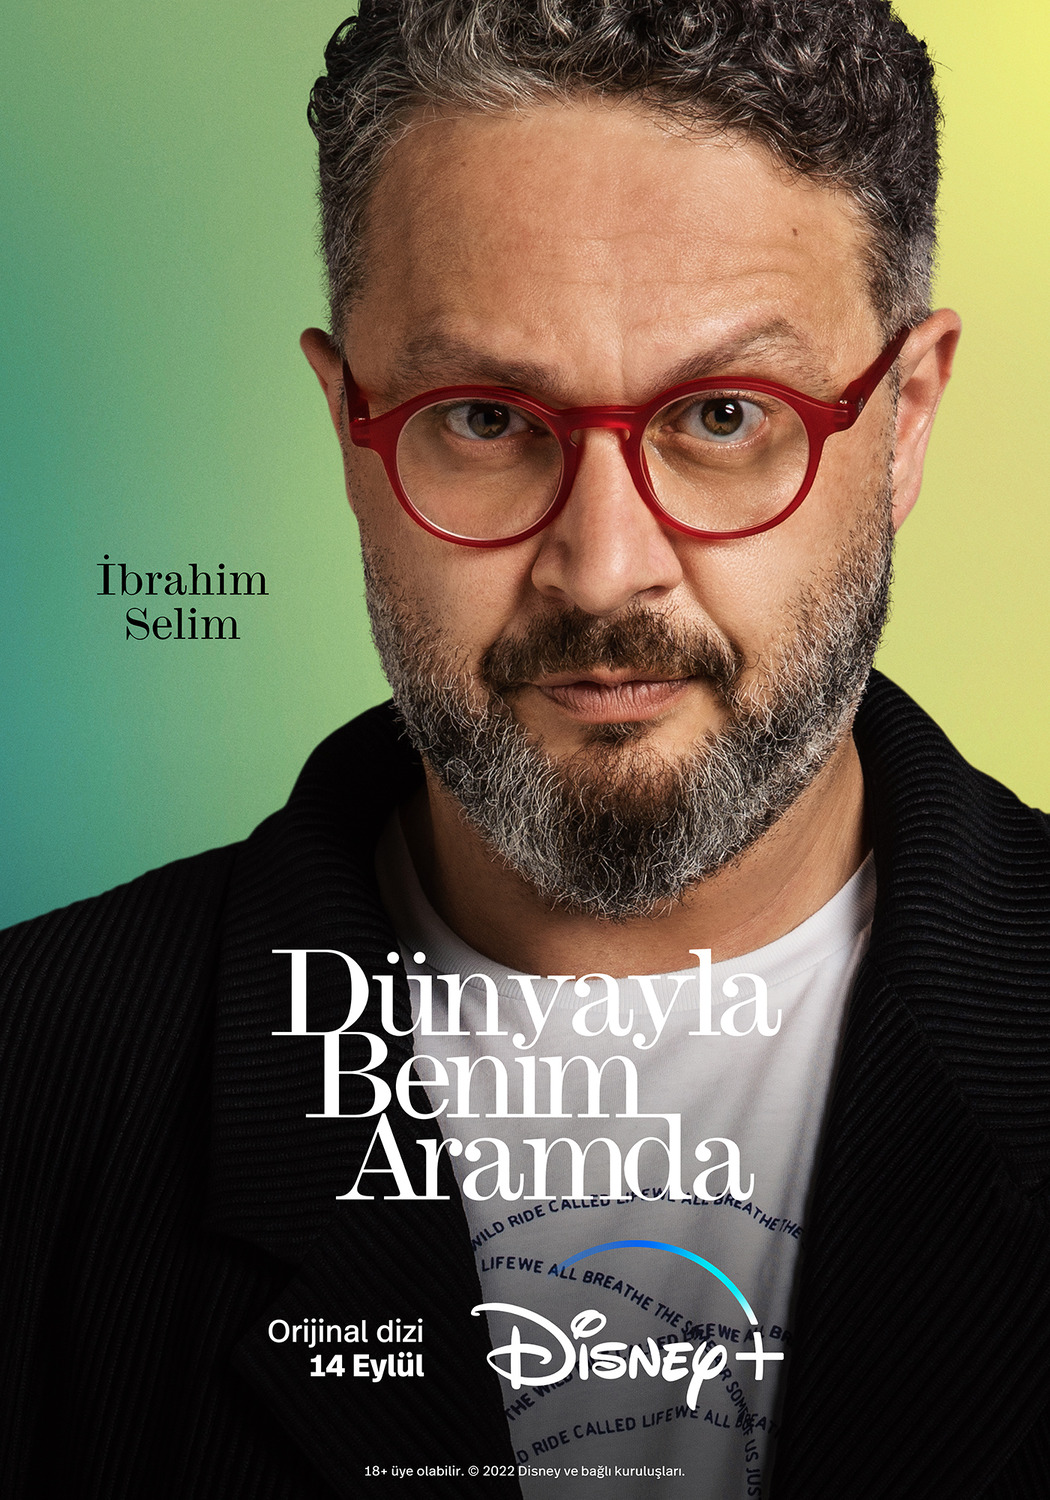 Extra Large TV Poster Image for Dünyayla Benim Aramda (#9 of 11)